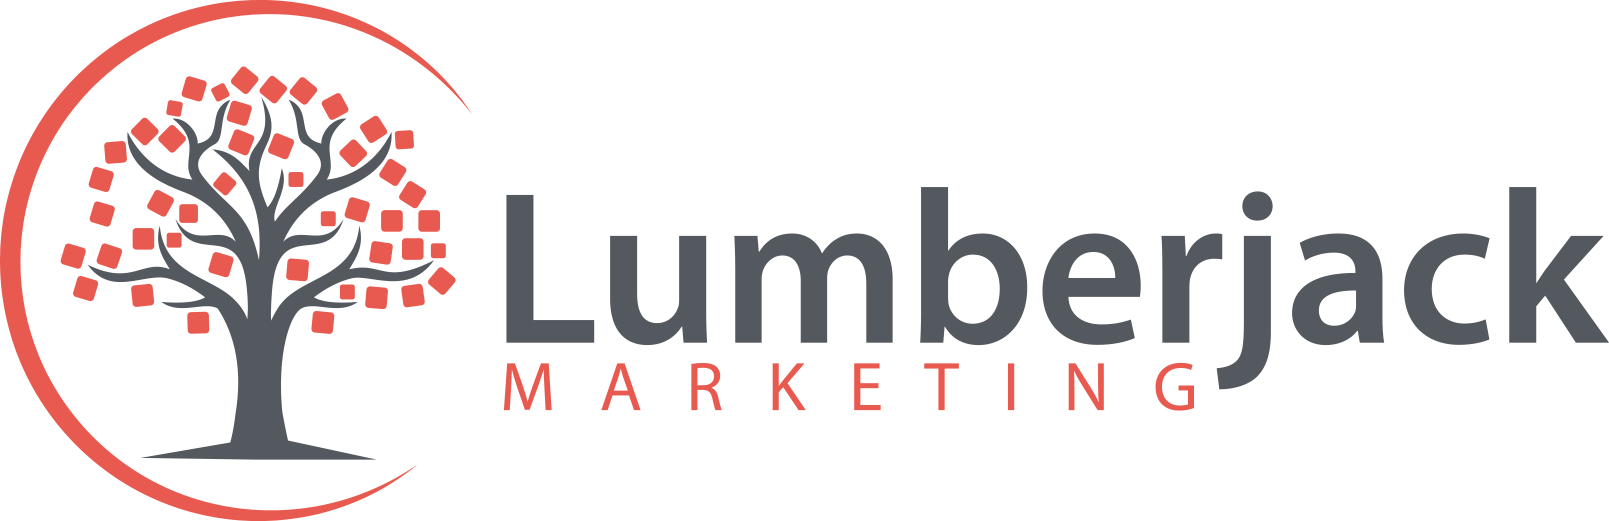 Lumberjack Marketing